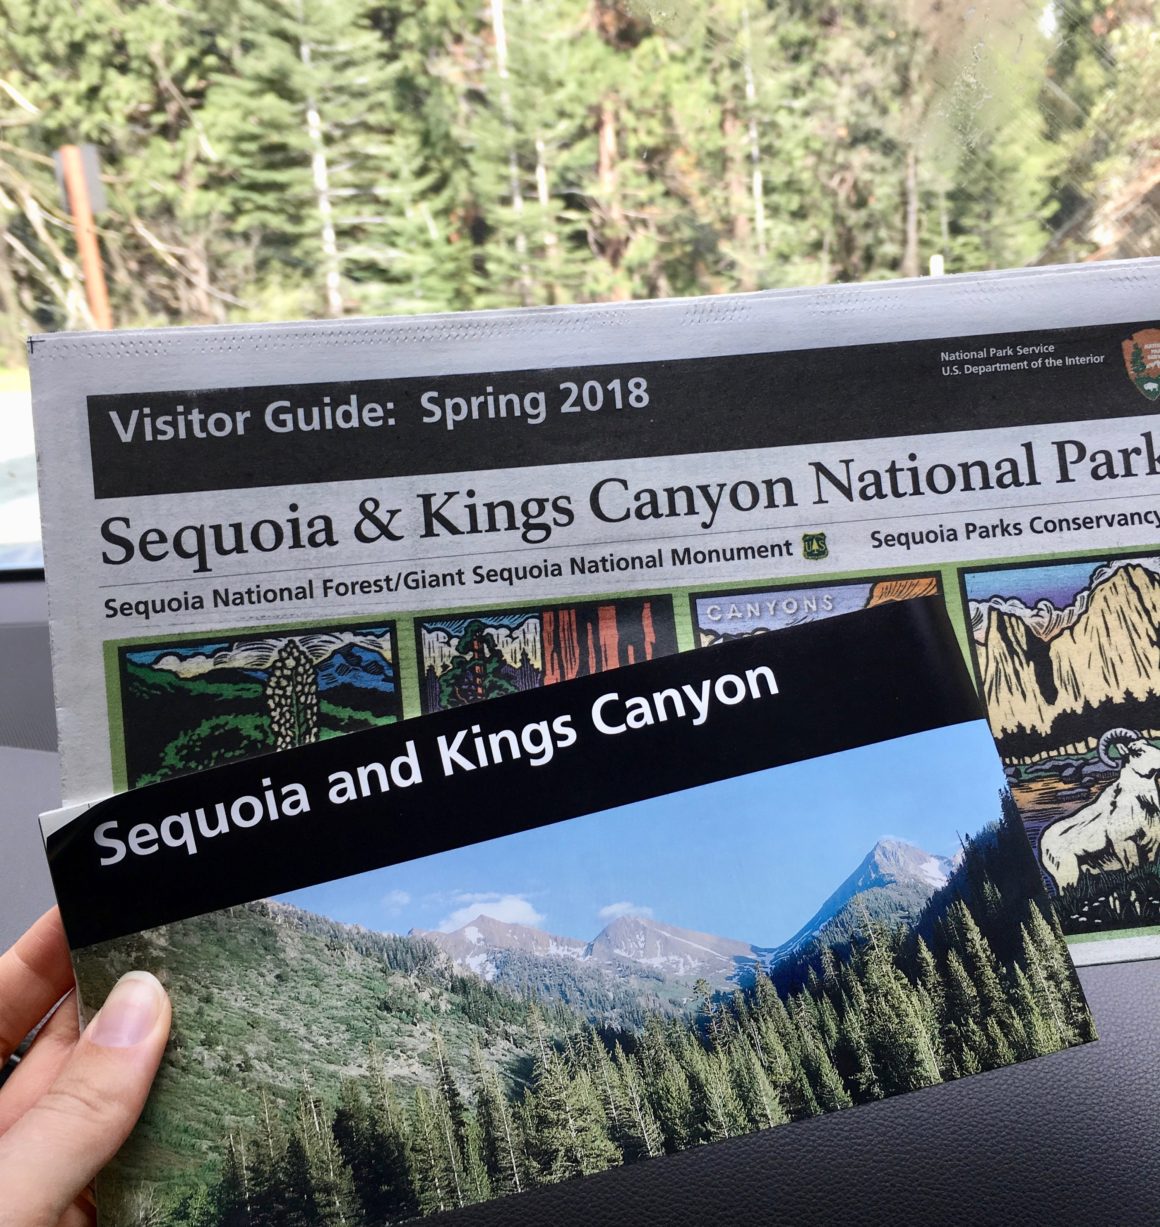 Sequoia National Park!